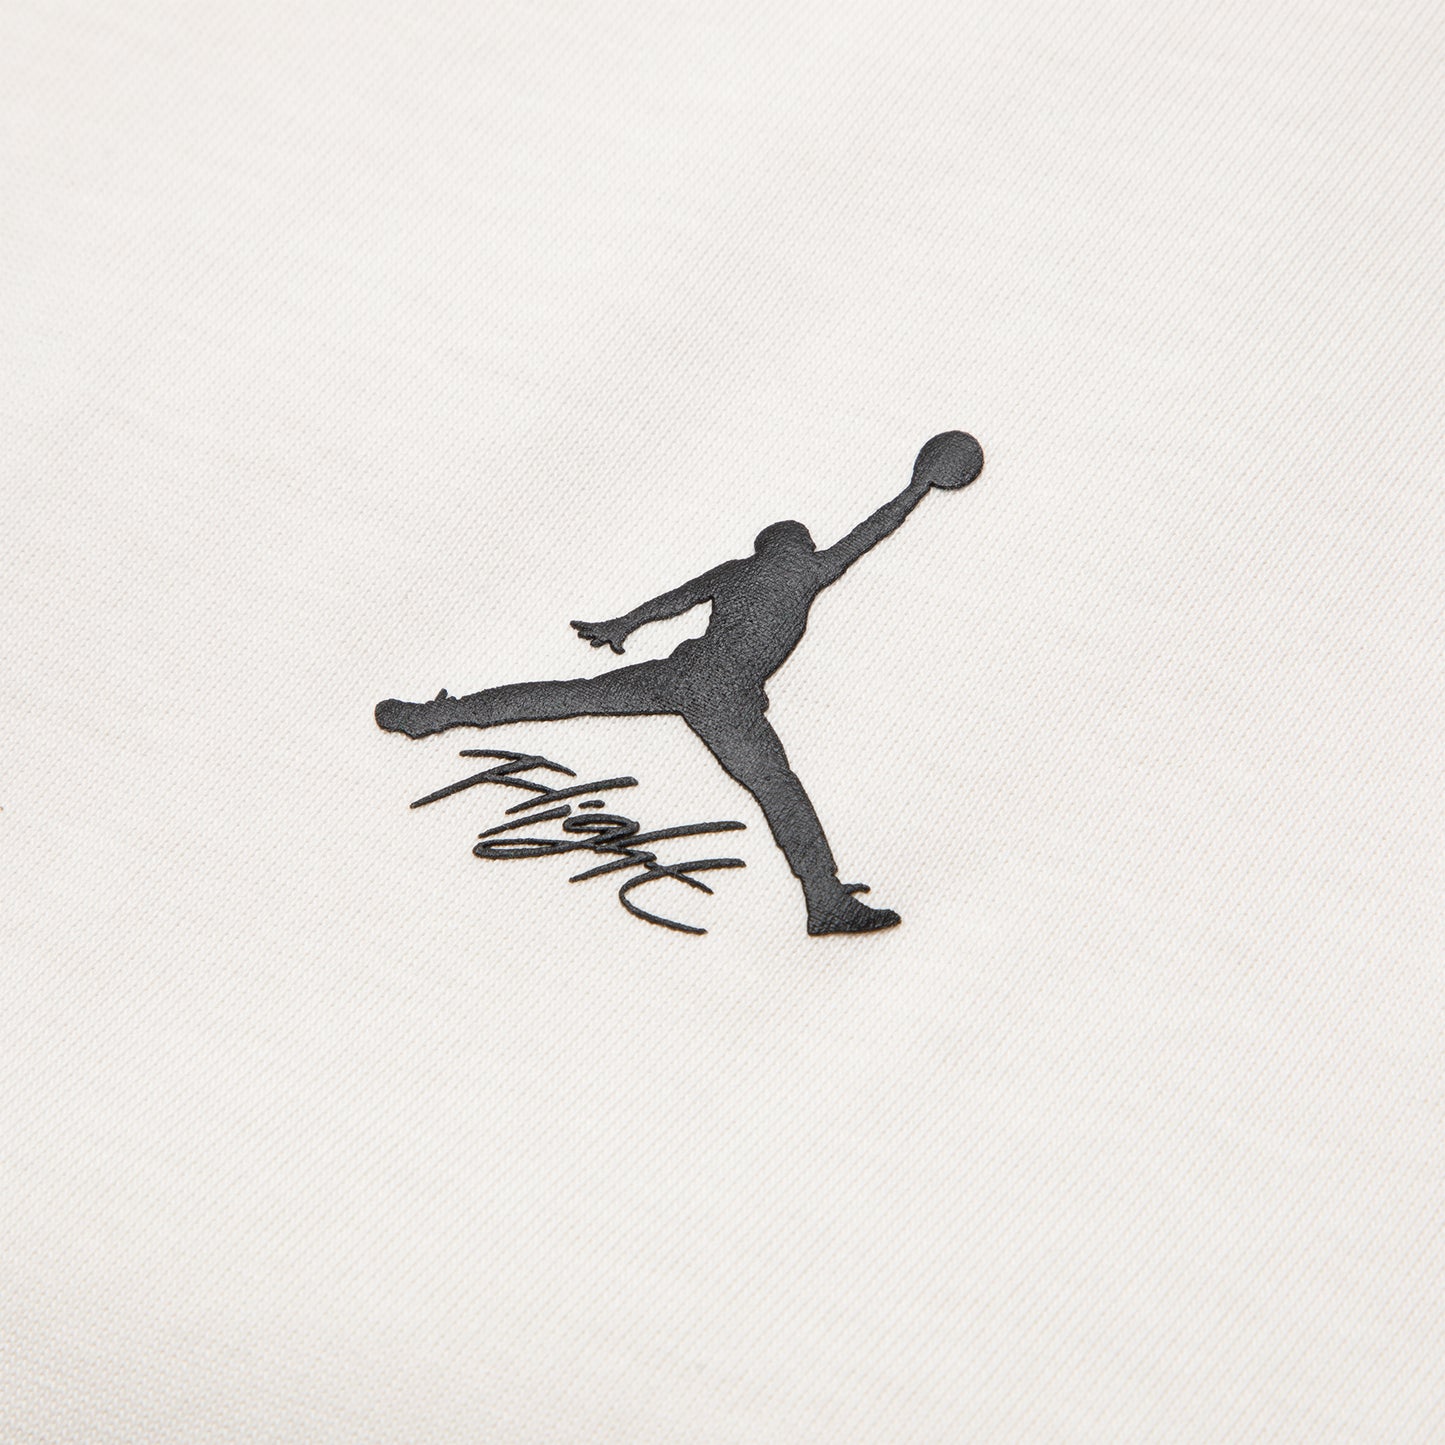 Nike Jordan Flight Heritage T-shirt (PHANTOM/DESERT/BLACK)